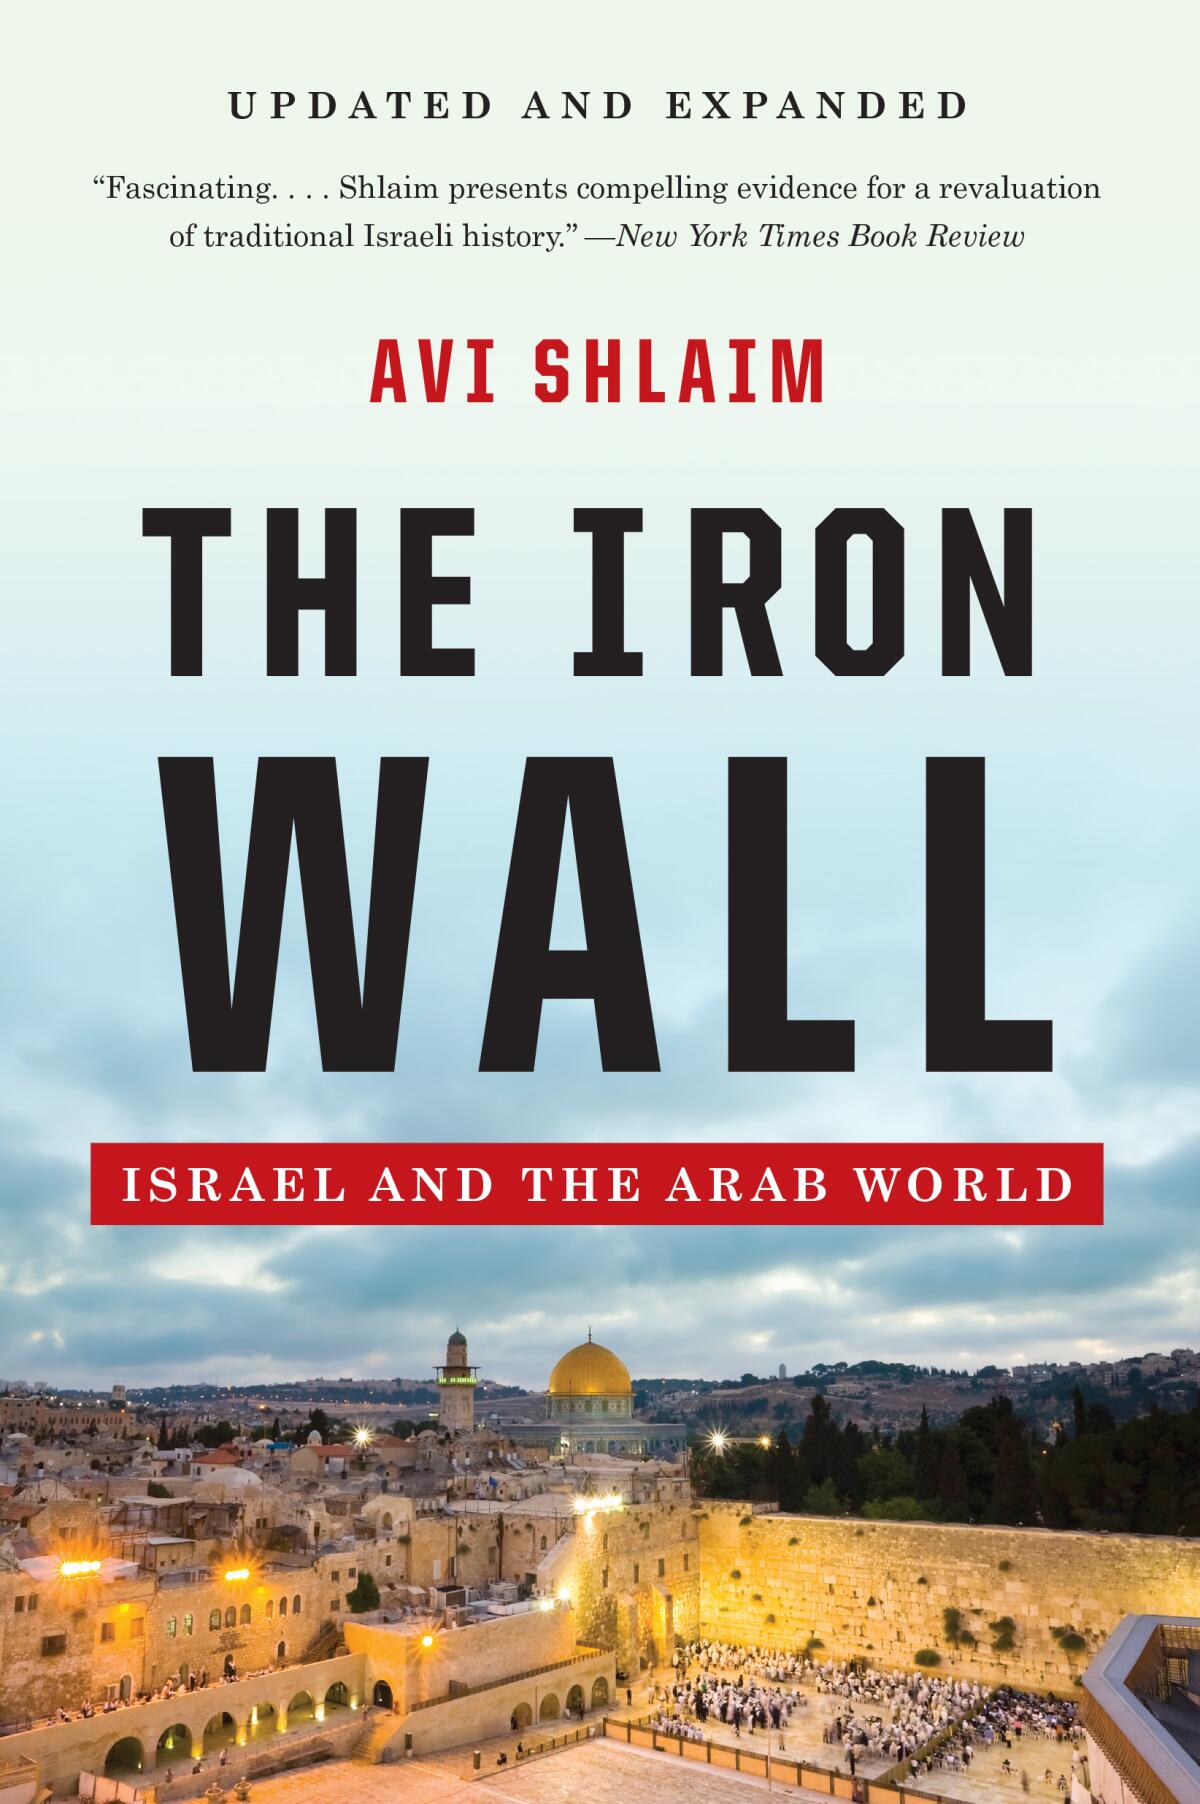 "The Iron Wall," by Avi Shlaim